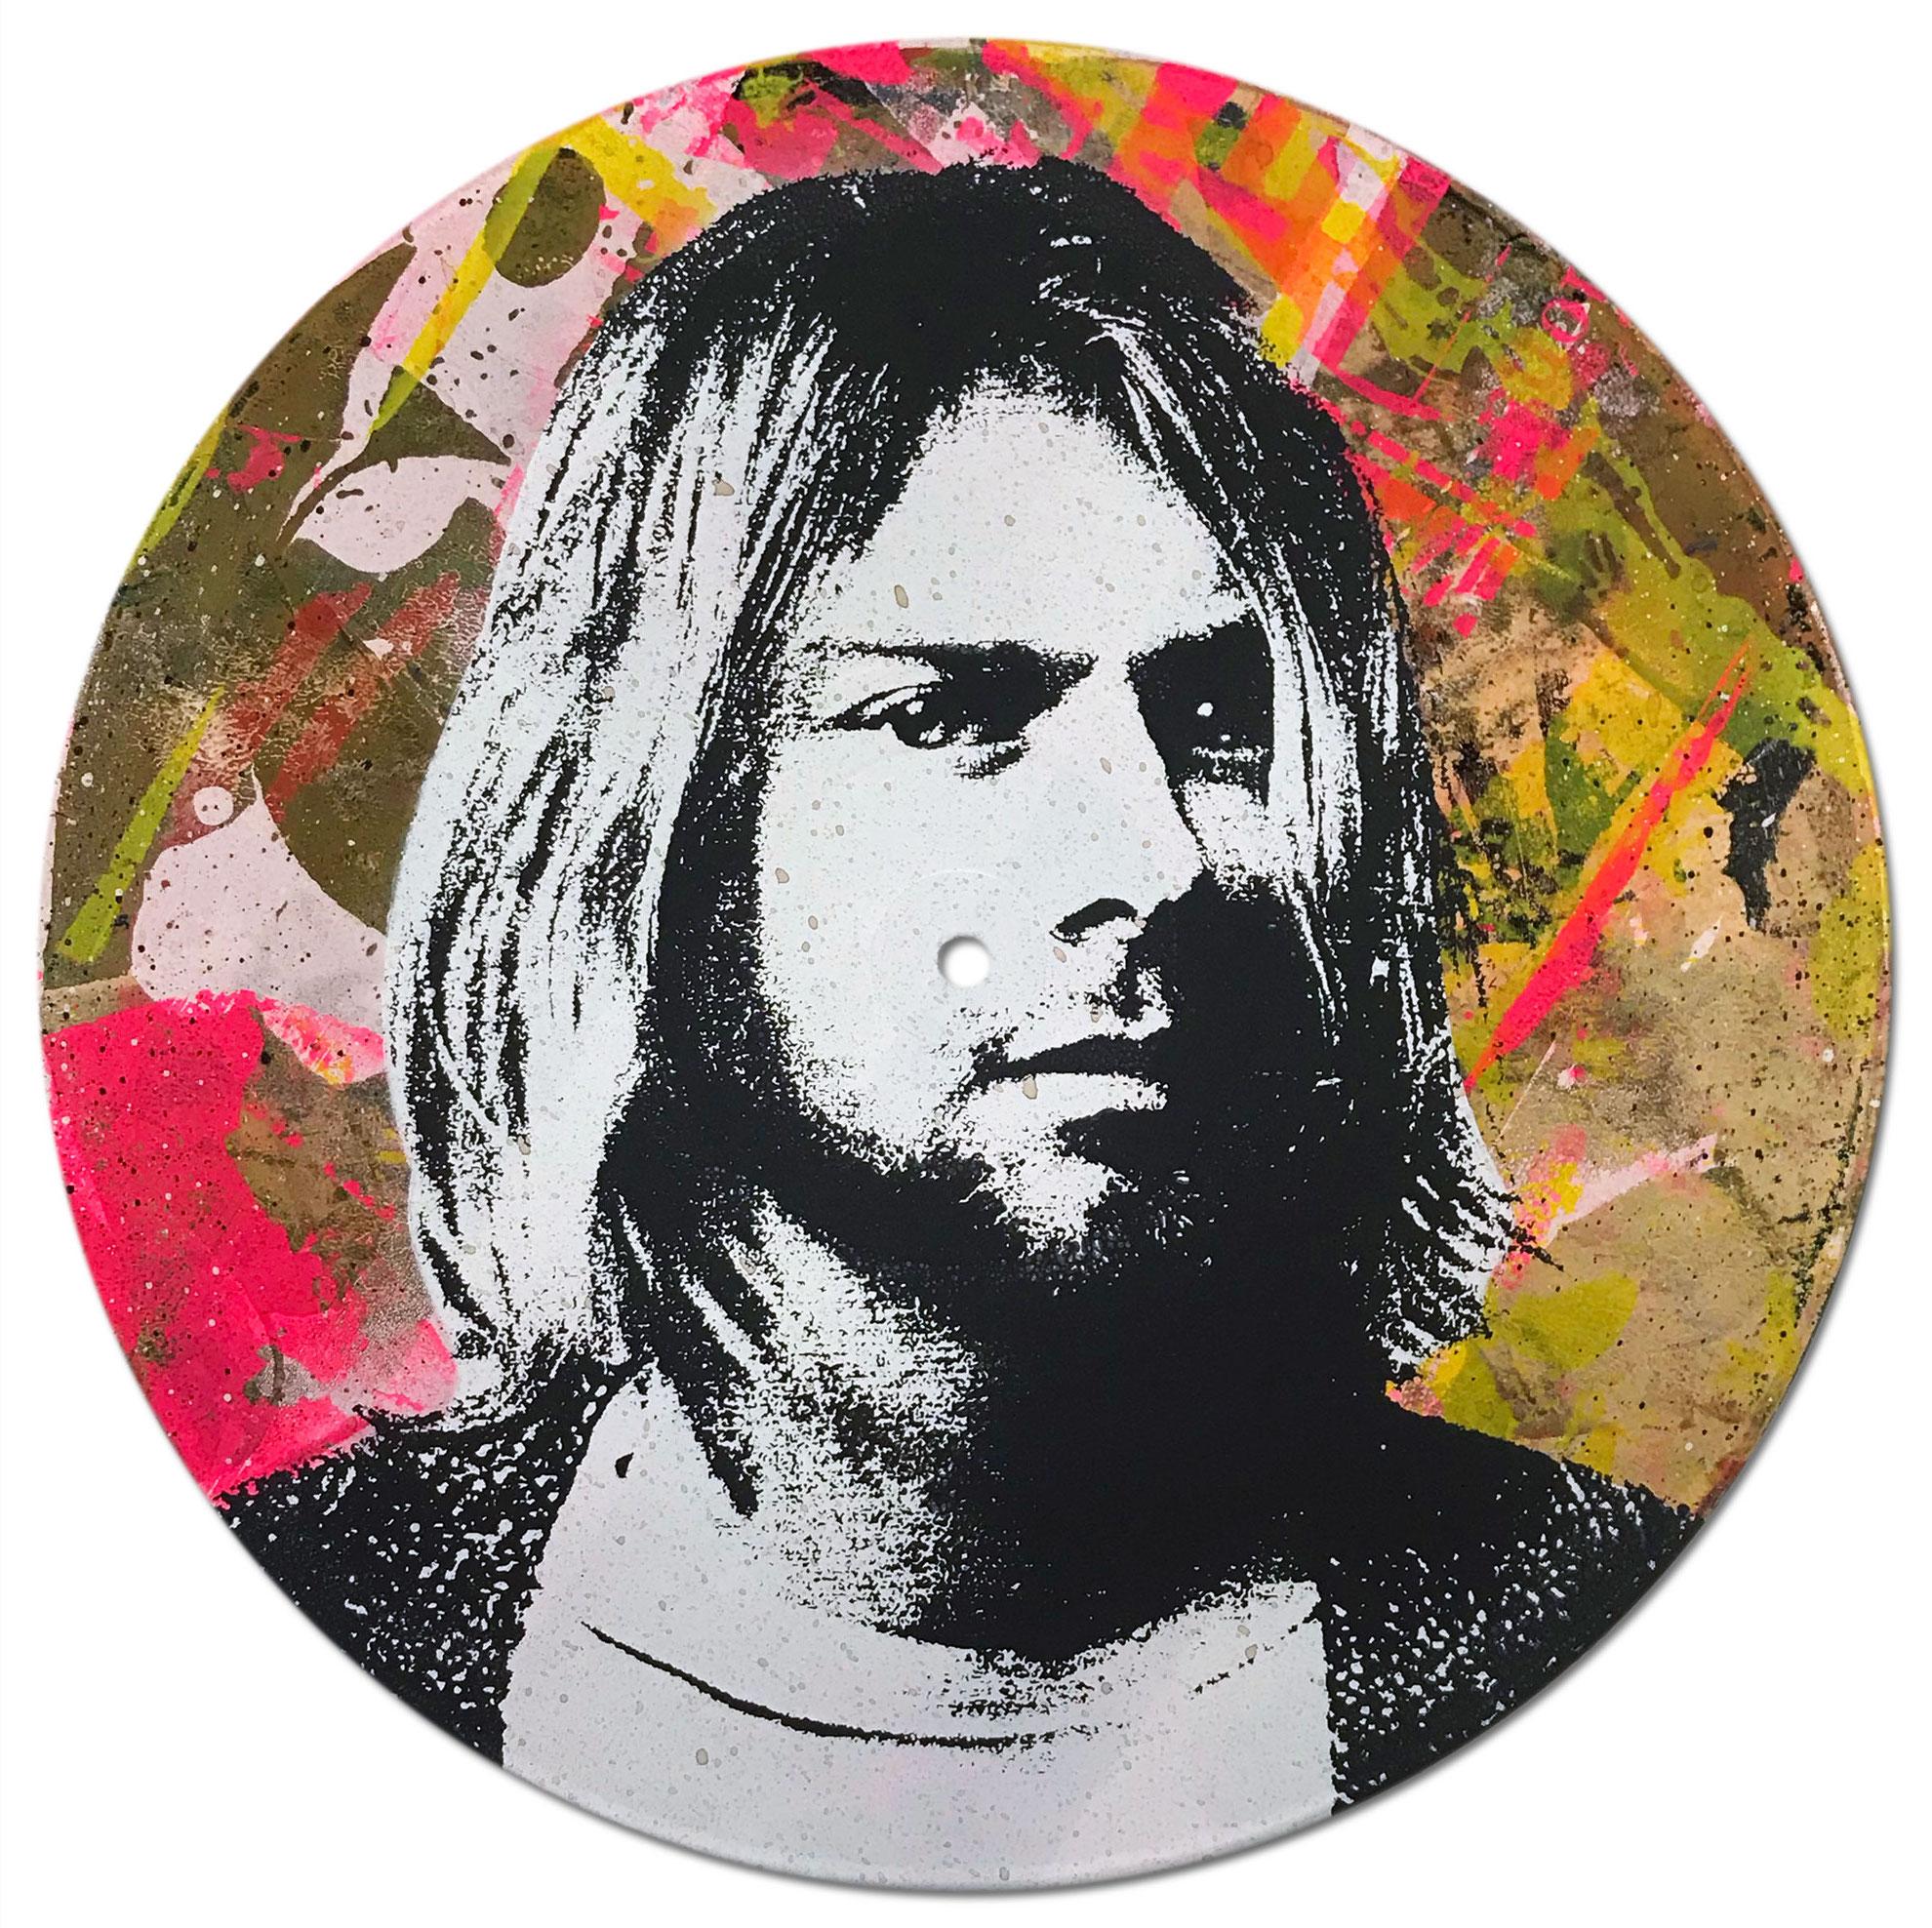 Kurt Cobain Vinyl 1-10, Greg Gossel Pop Art LP Record (Singles & Sets Available) For Sale 1